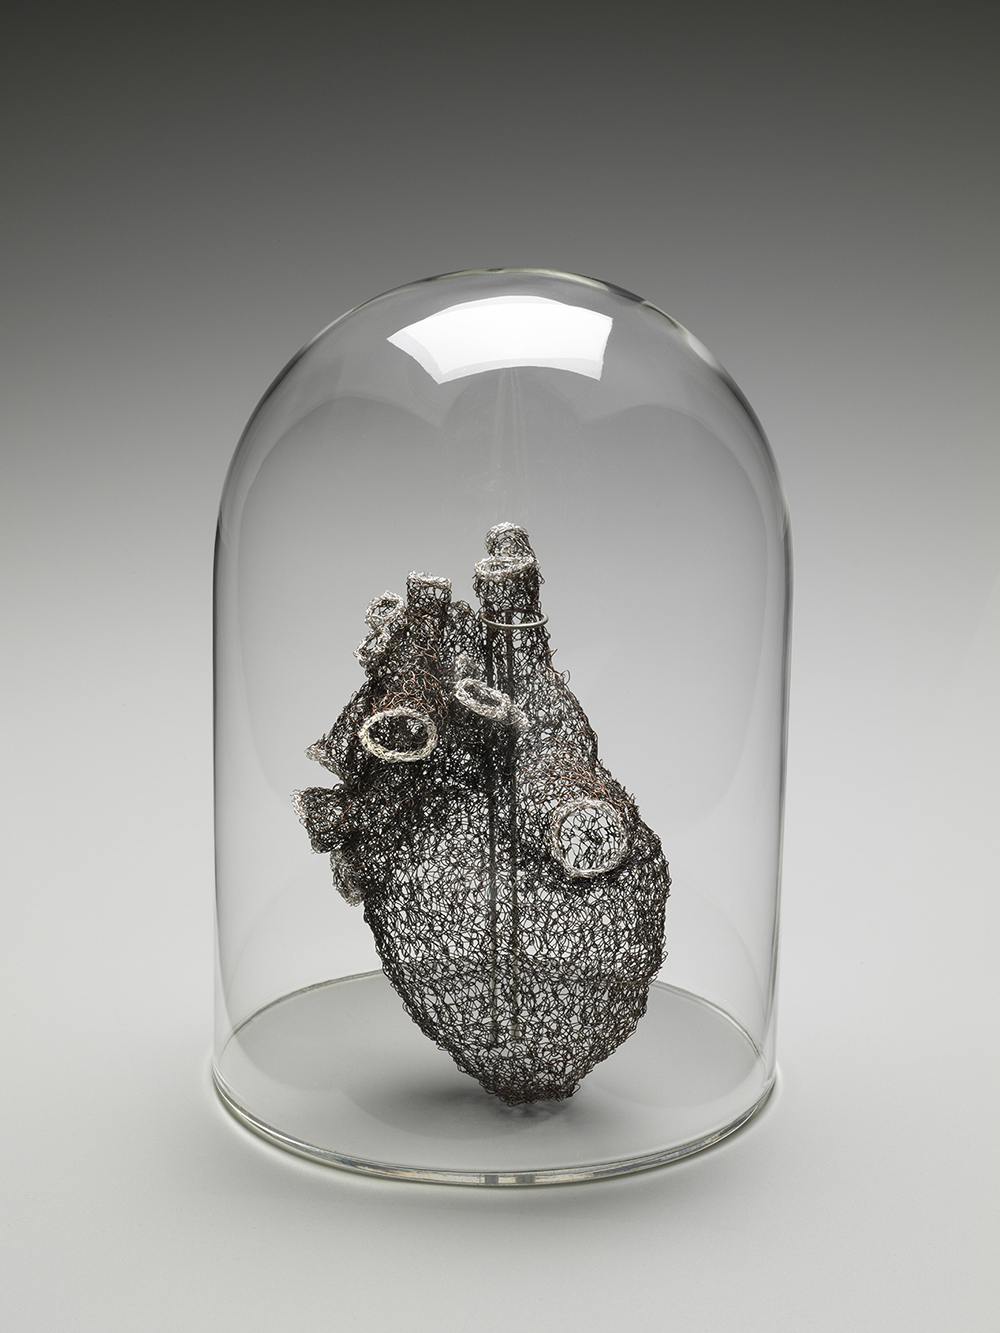 Des sculptures d’organes crochetées en fils de métal